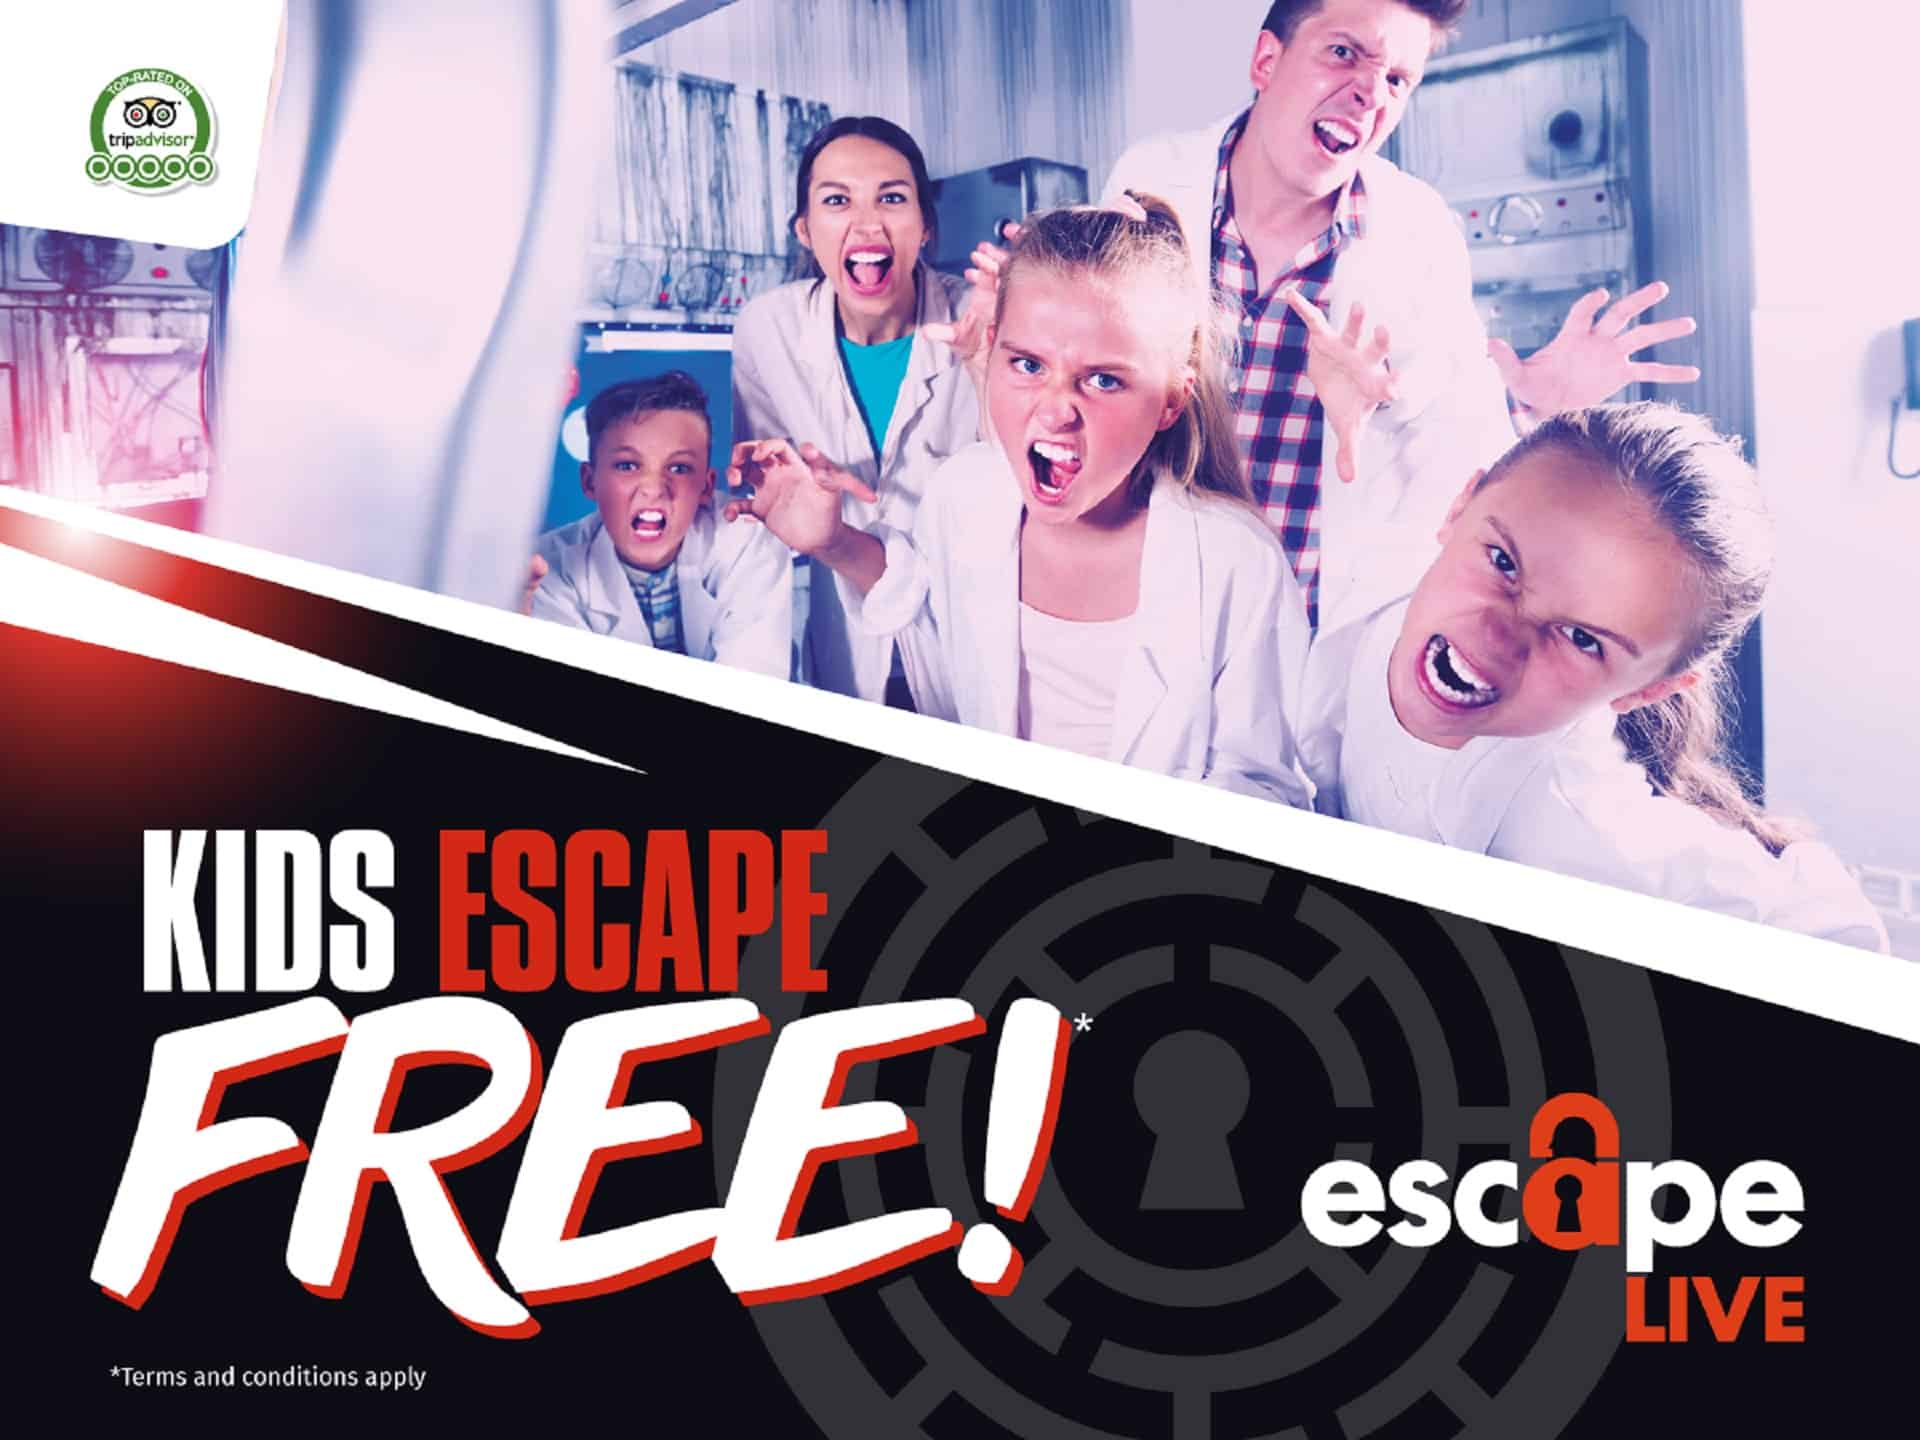 Escape Live Coventry - The Live Escape Room Game in UK